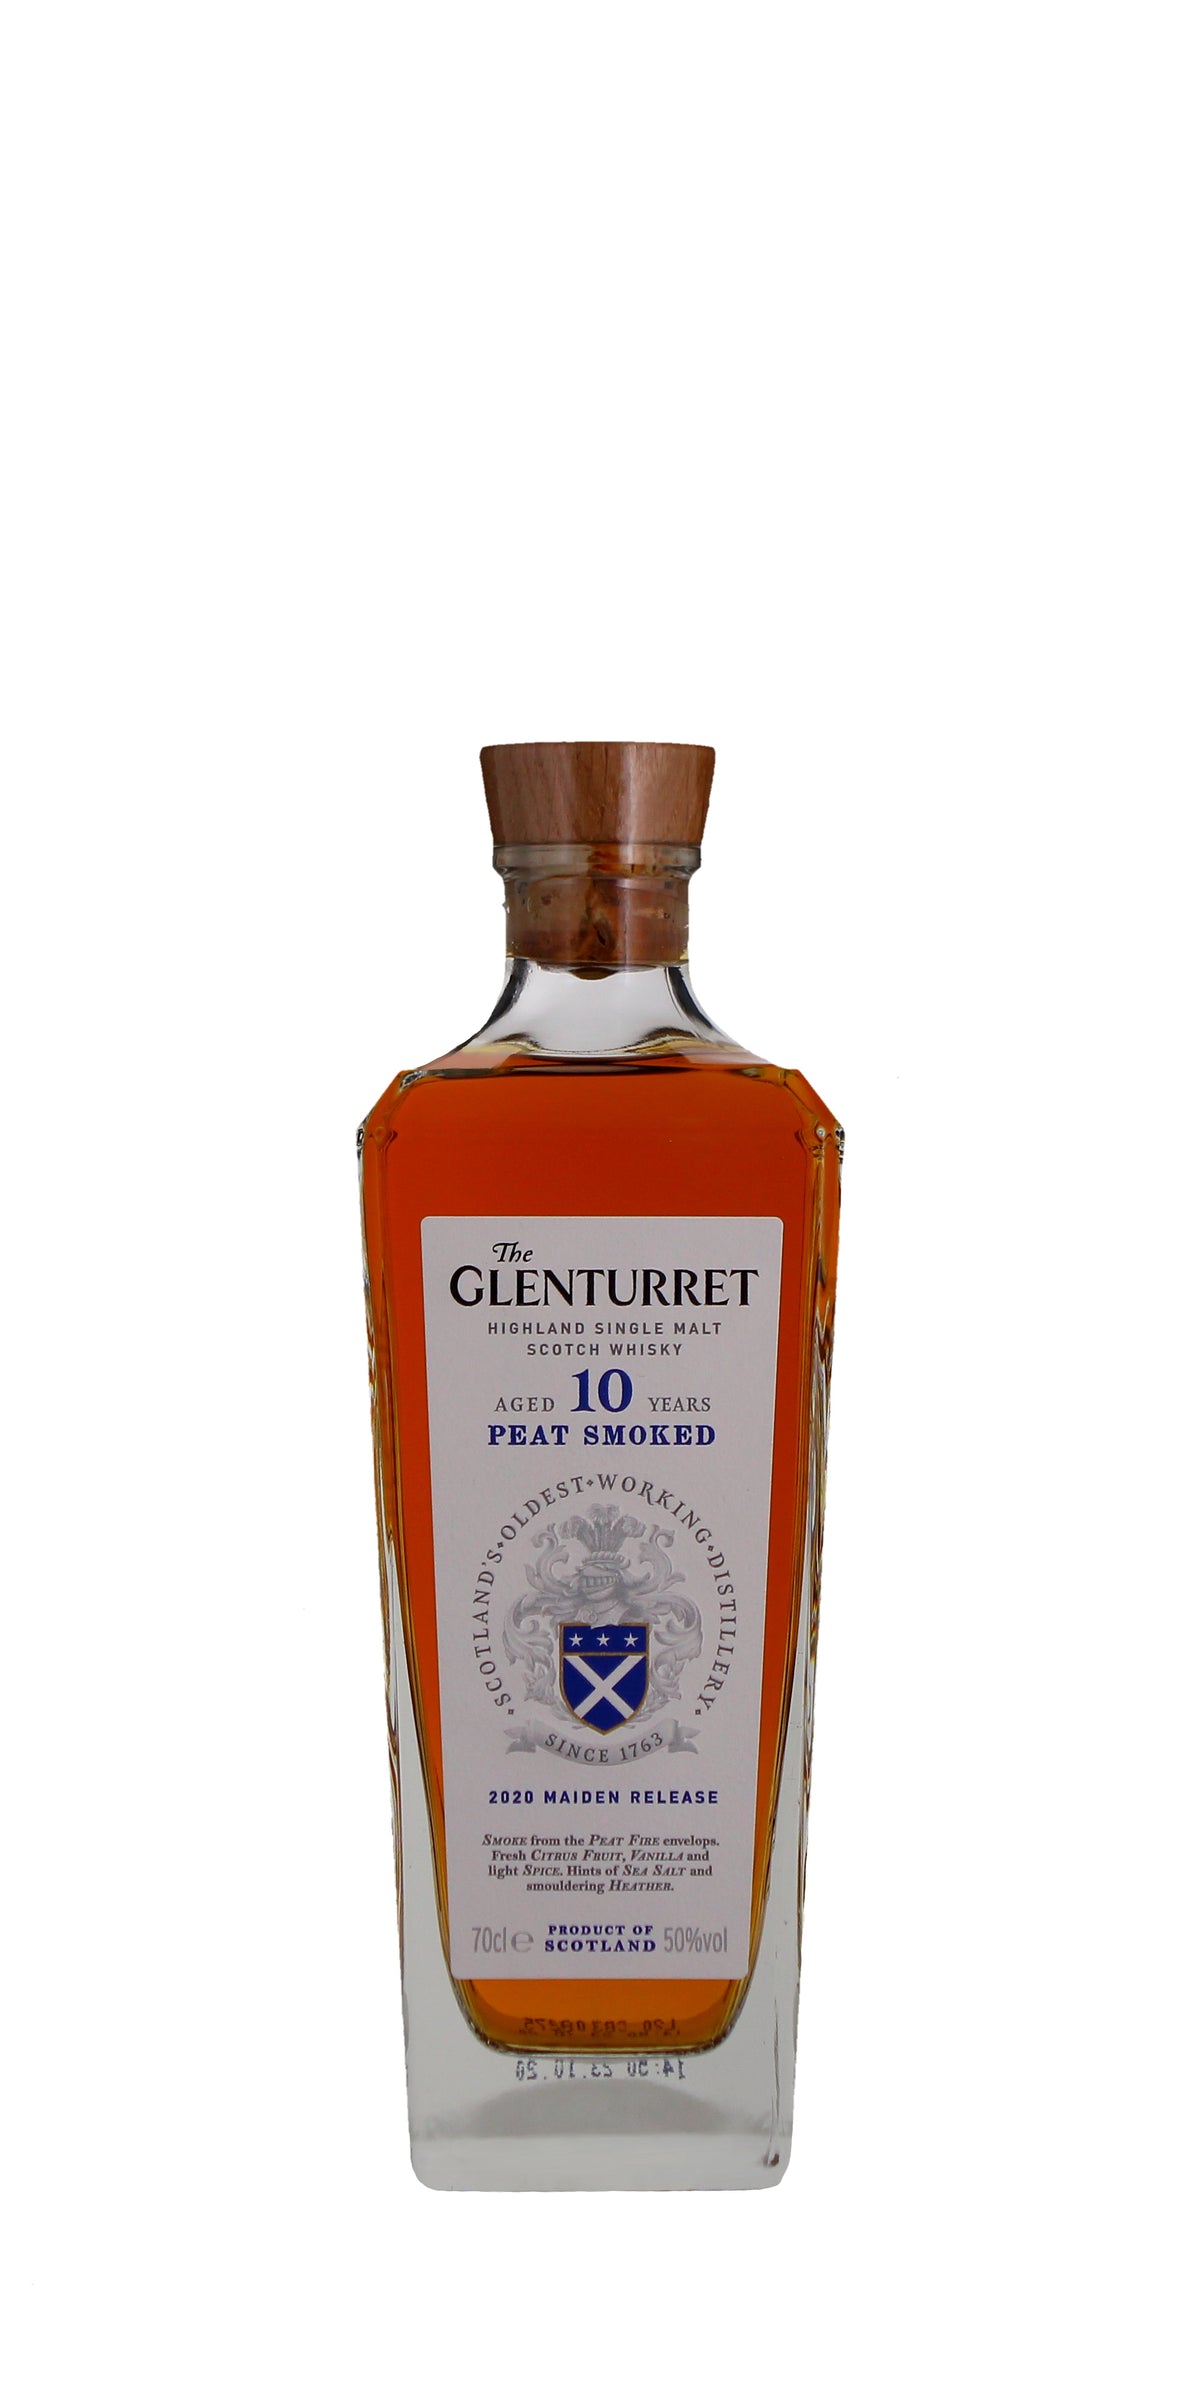 The Glenturret, Highland Single Malt, Peat Smoked 10 Year